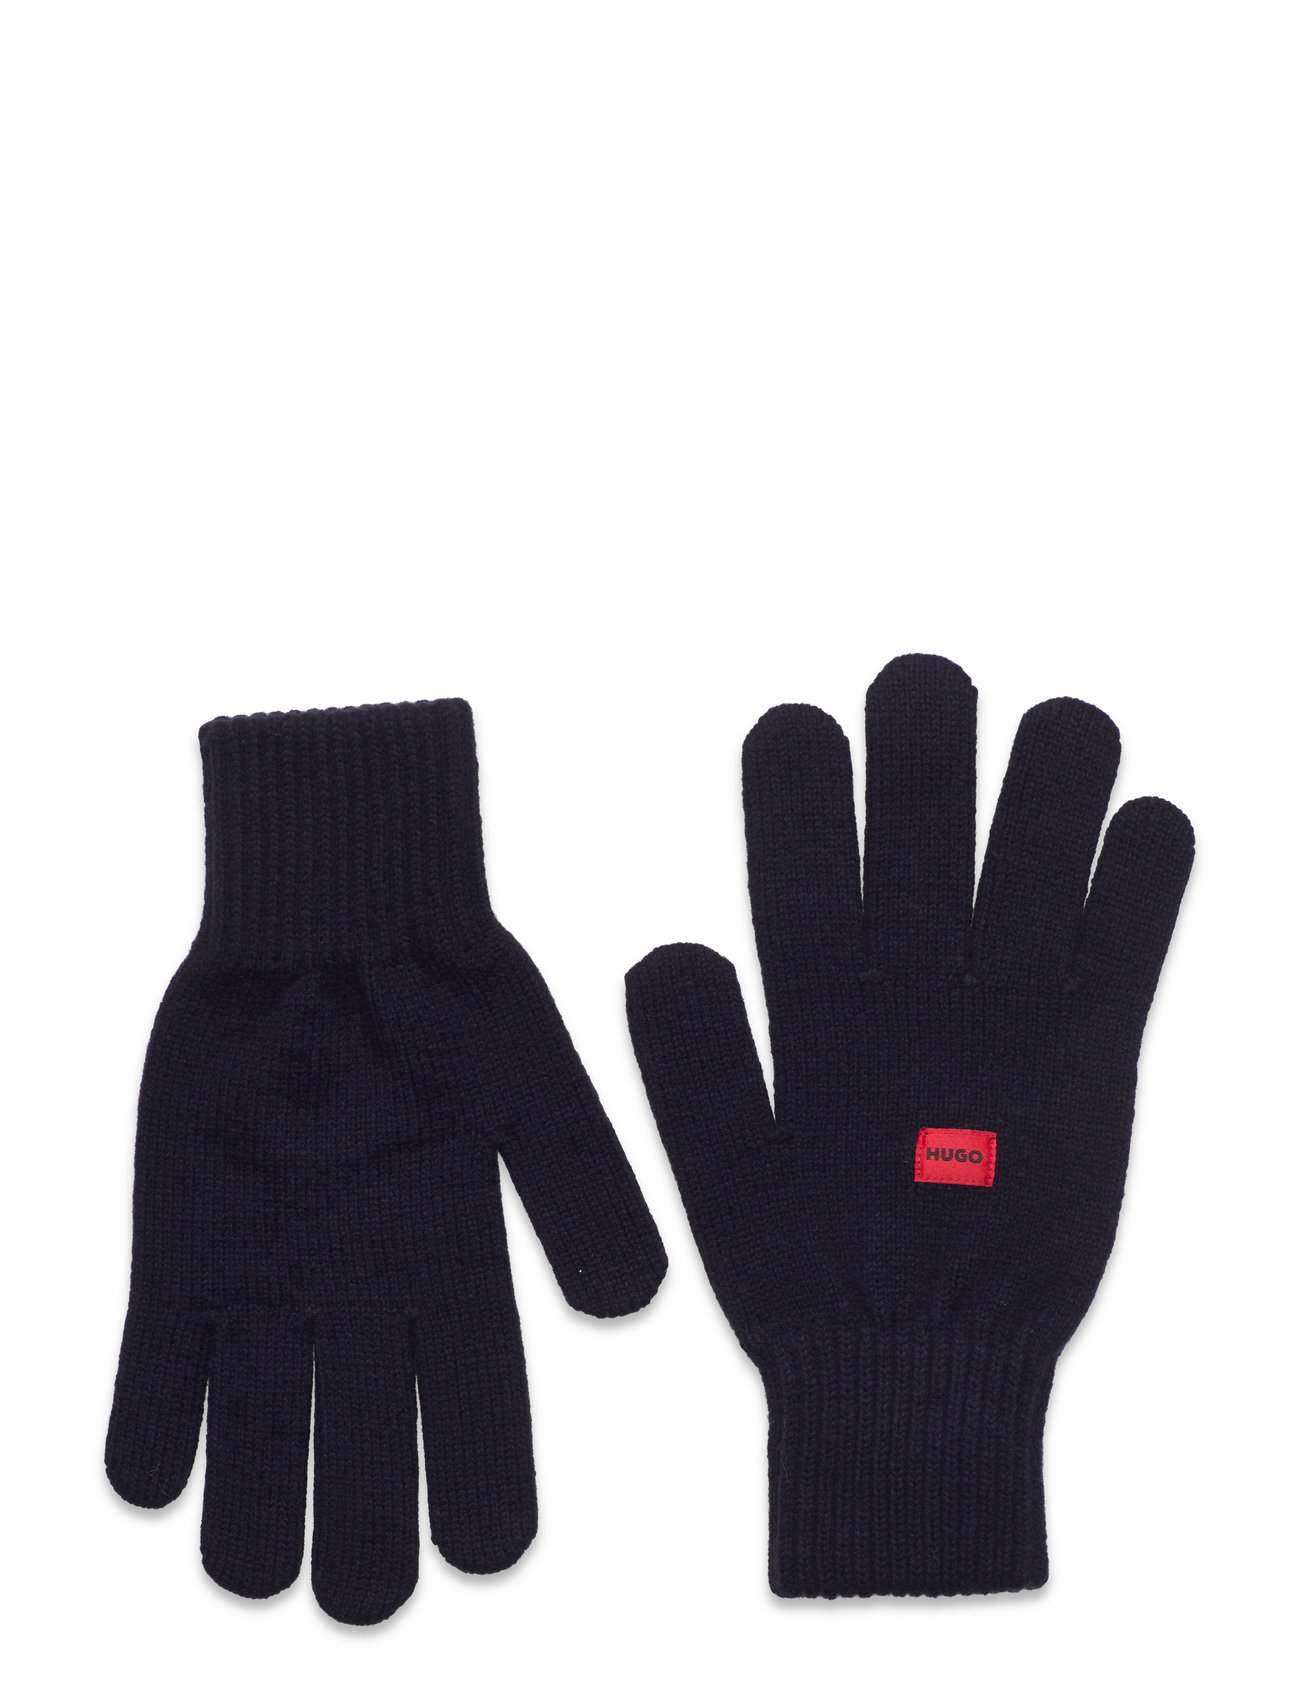 - Waff HUGO 3 Gloves